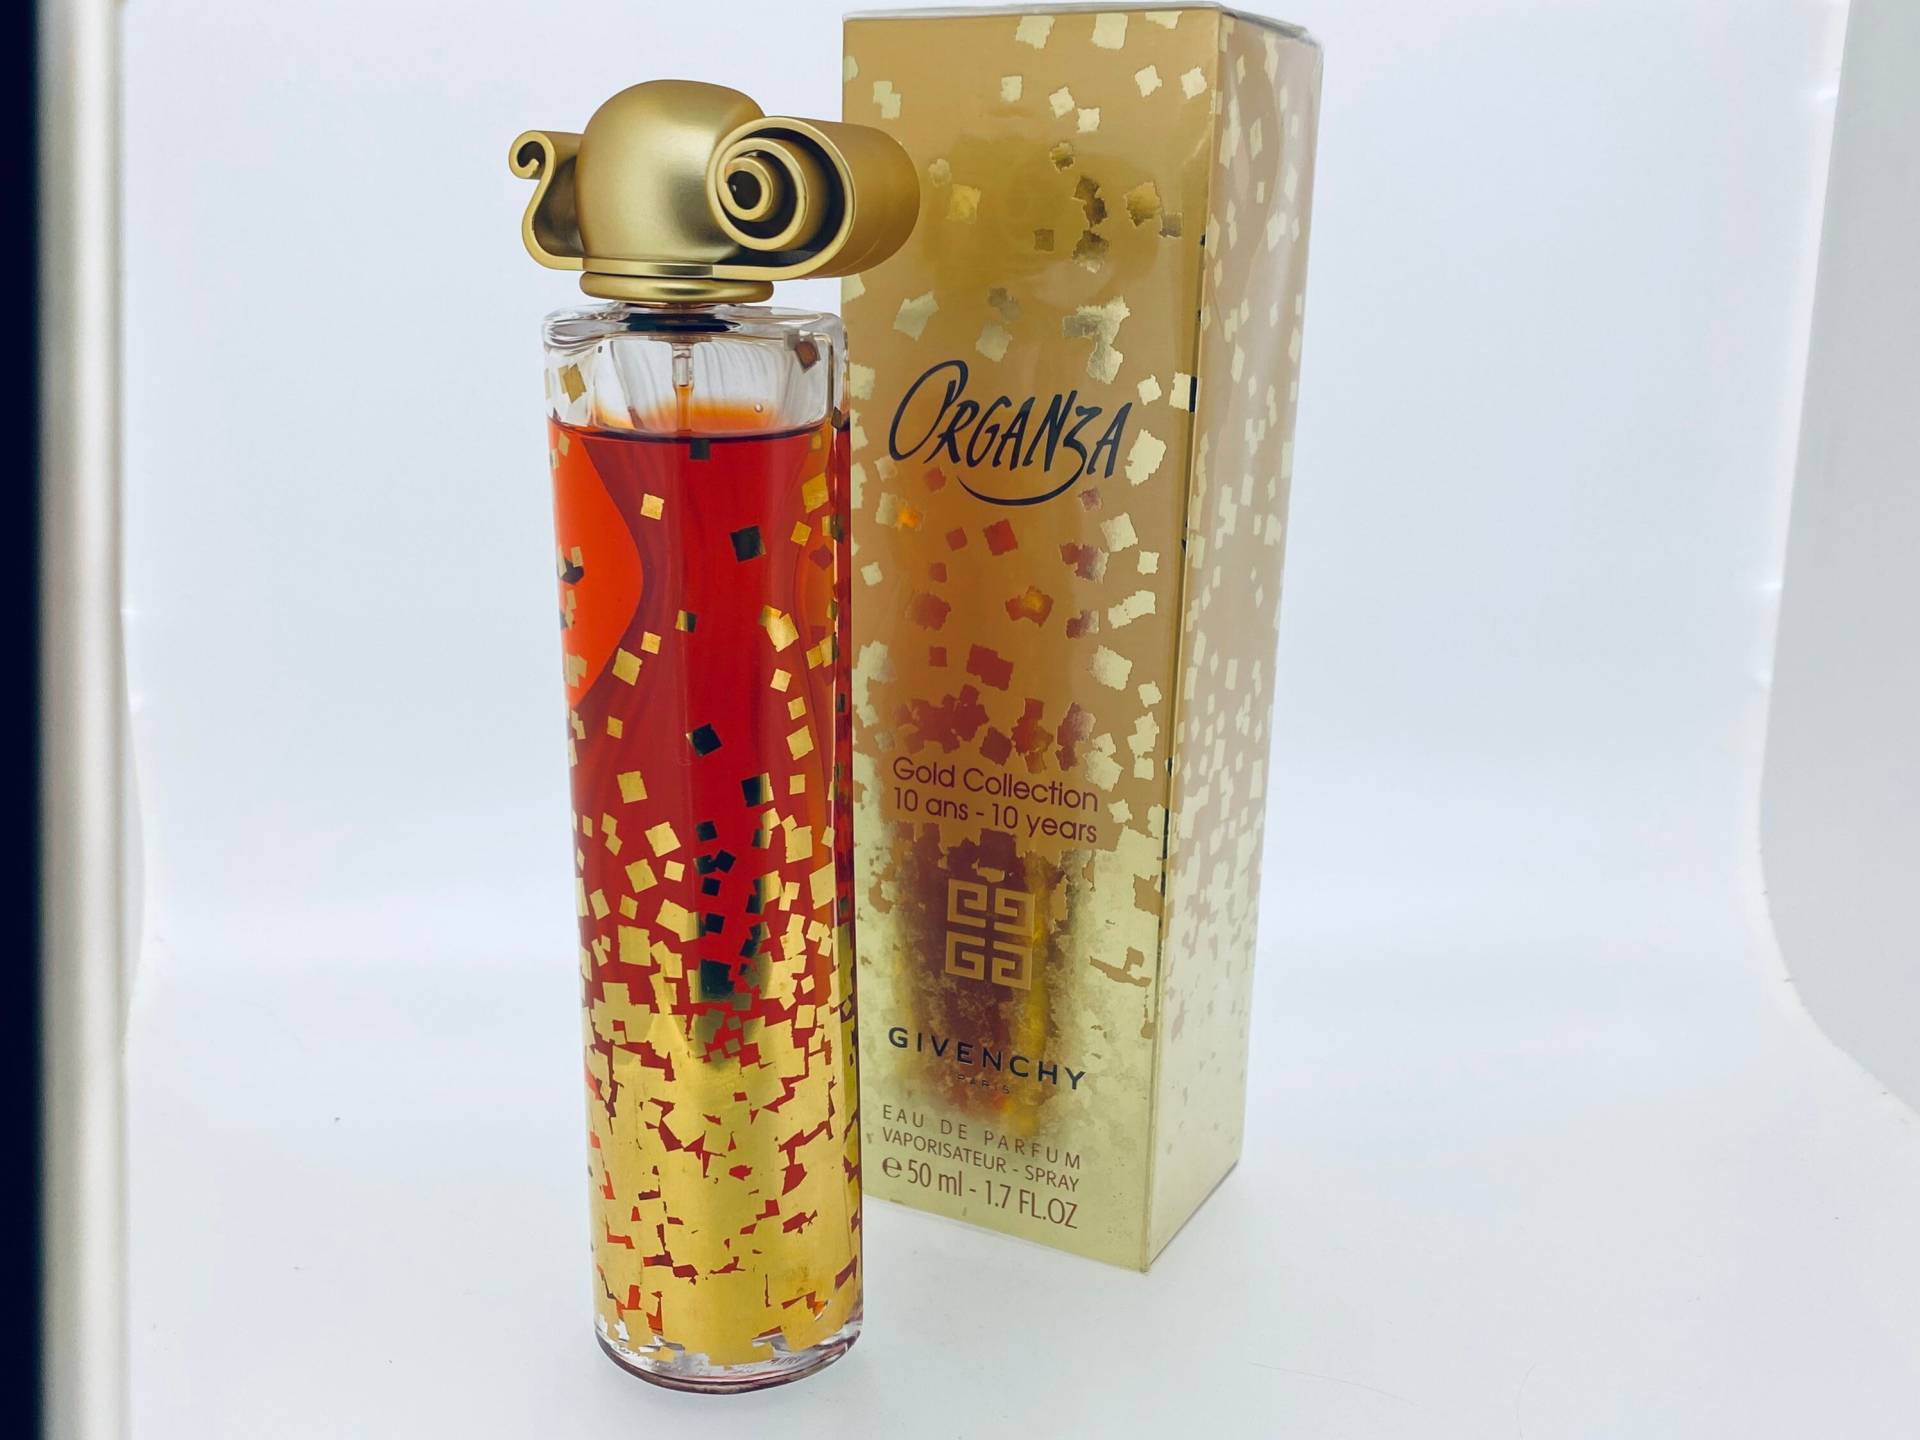 Organza Gold Kollektion 10 Ans - Jahre Givenchy Eau De Parfum 50 Ml von Etsy - VintagePerfumeShop